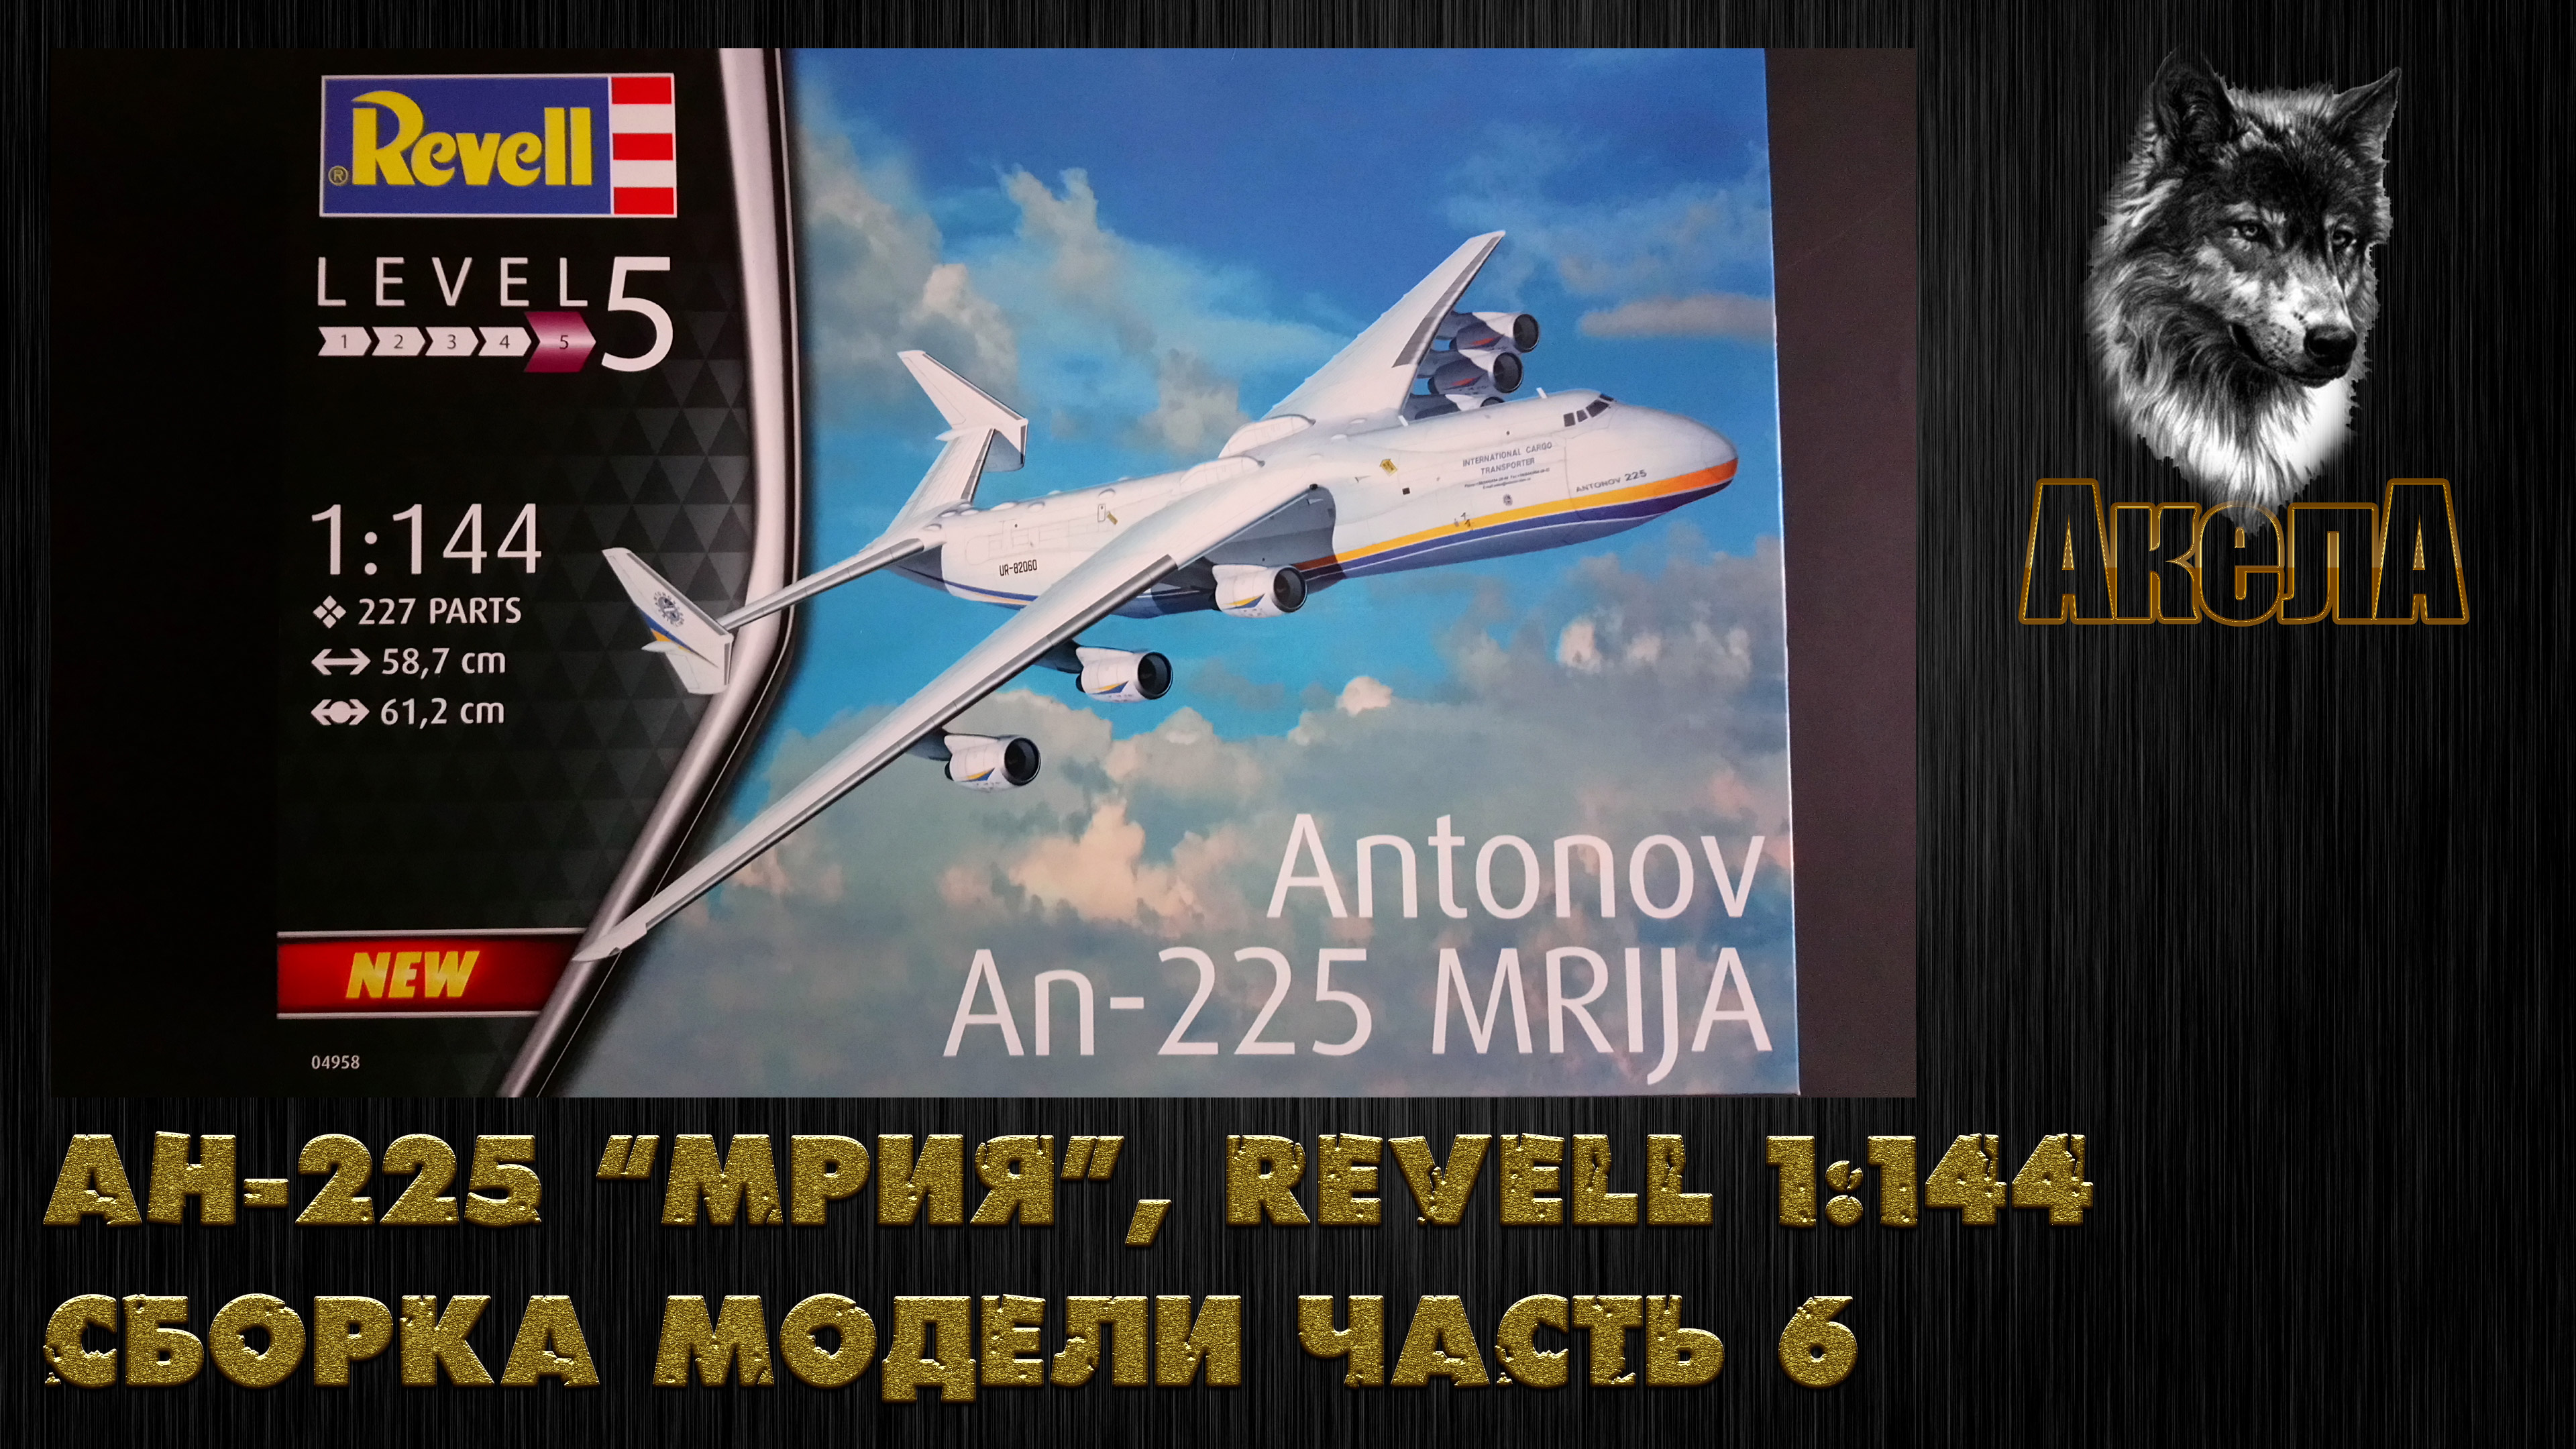 Ан-225 "Мрия", Revell 1/144, сборка модели, часть 6